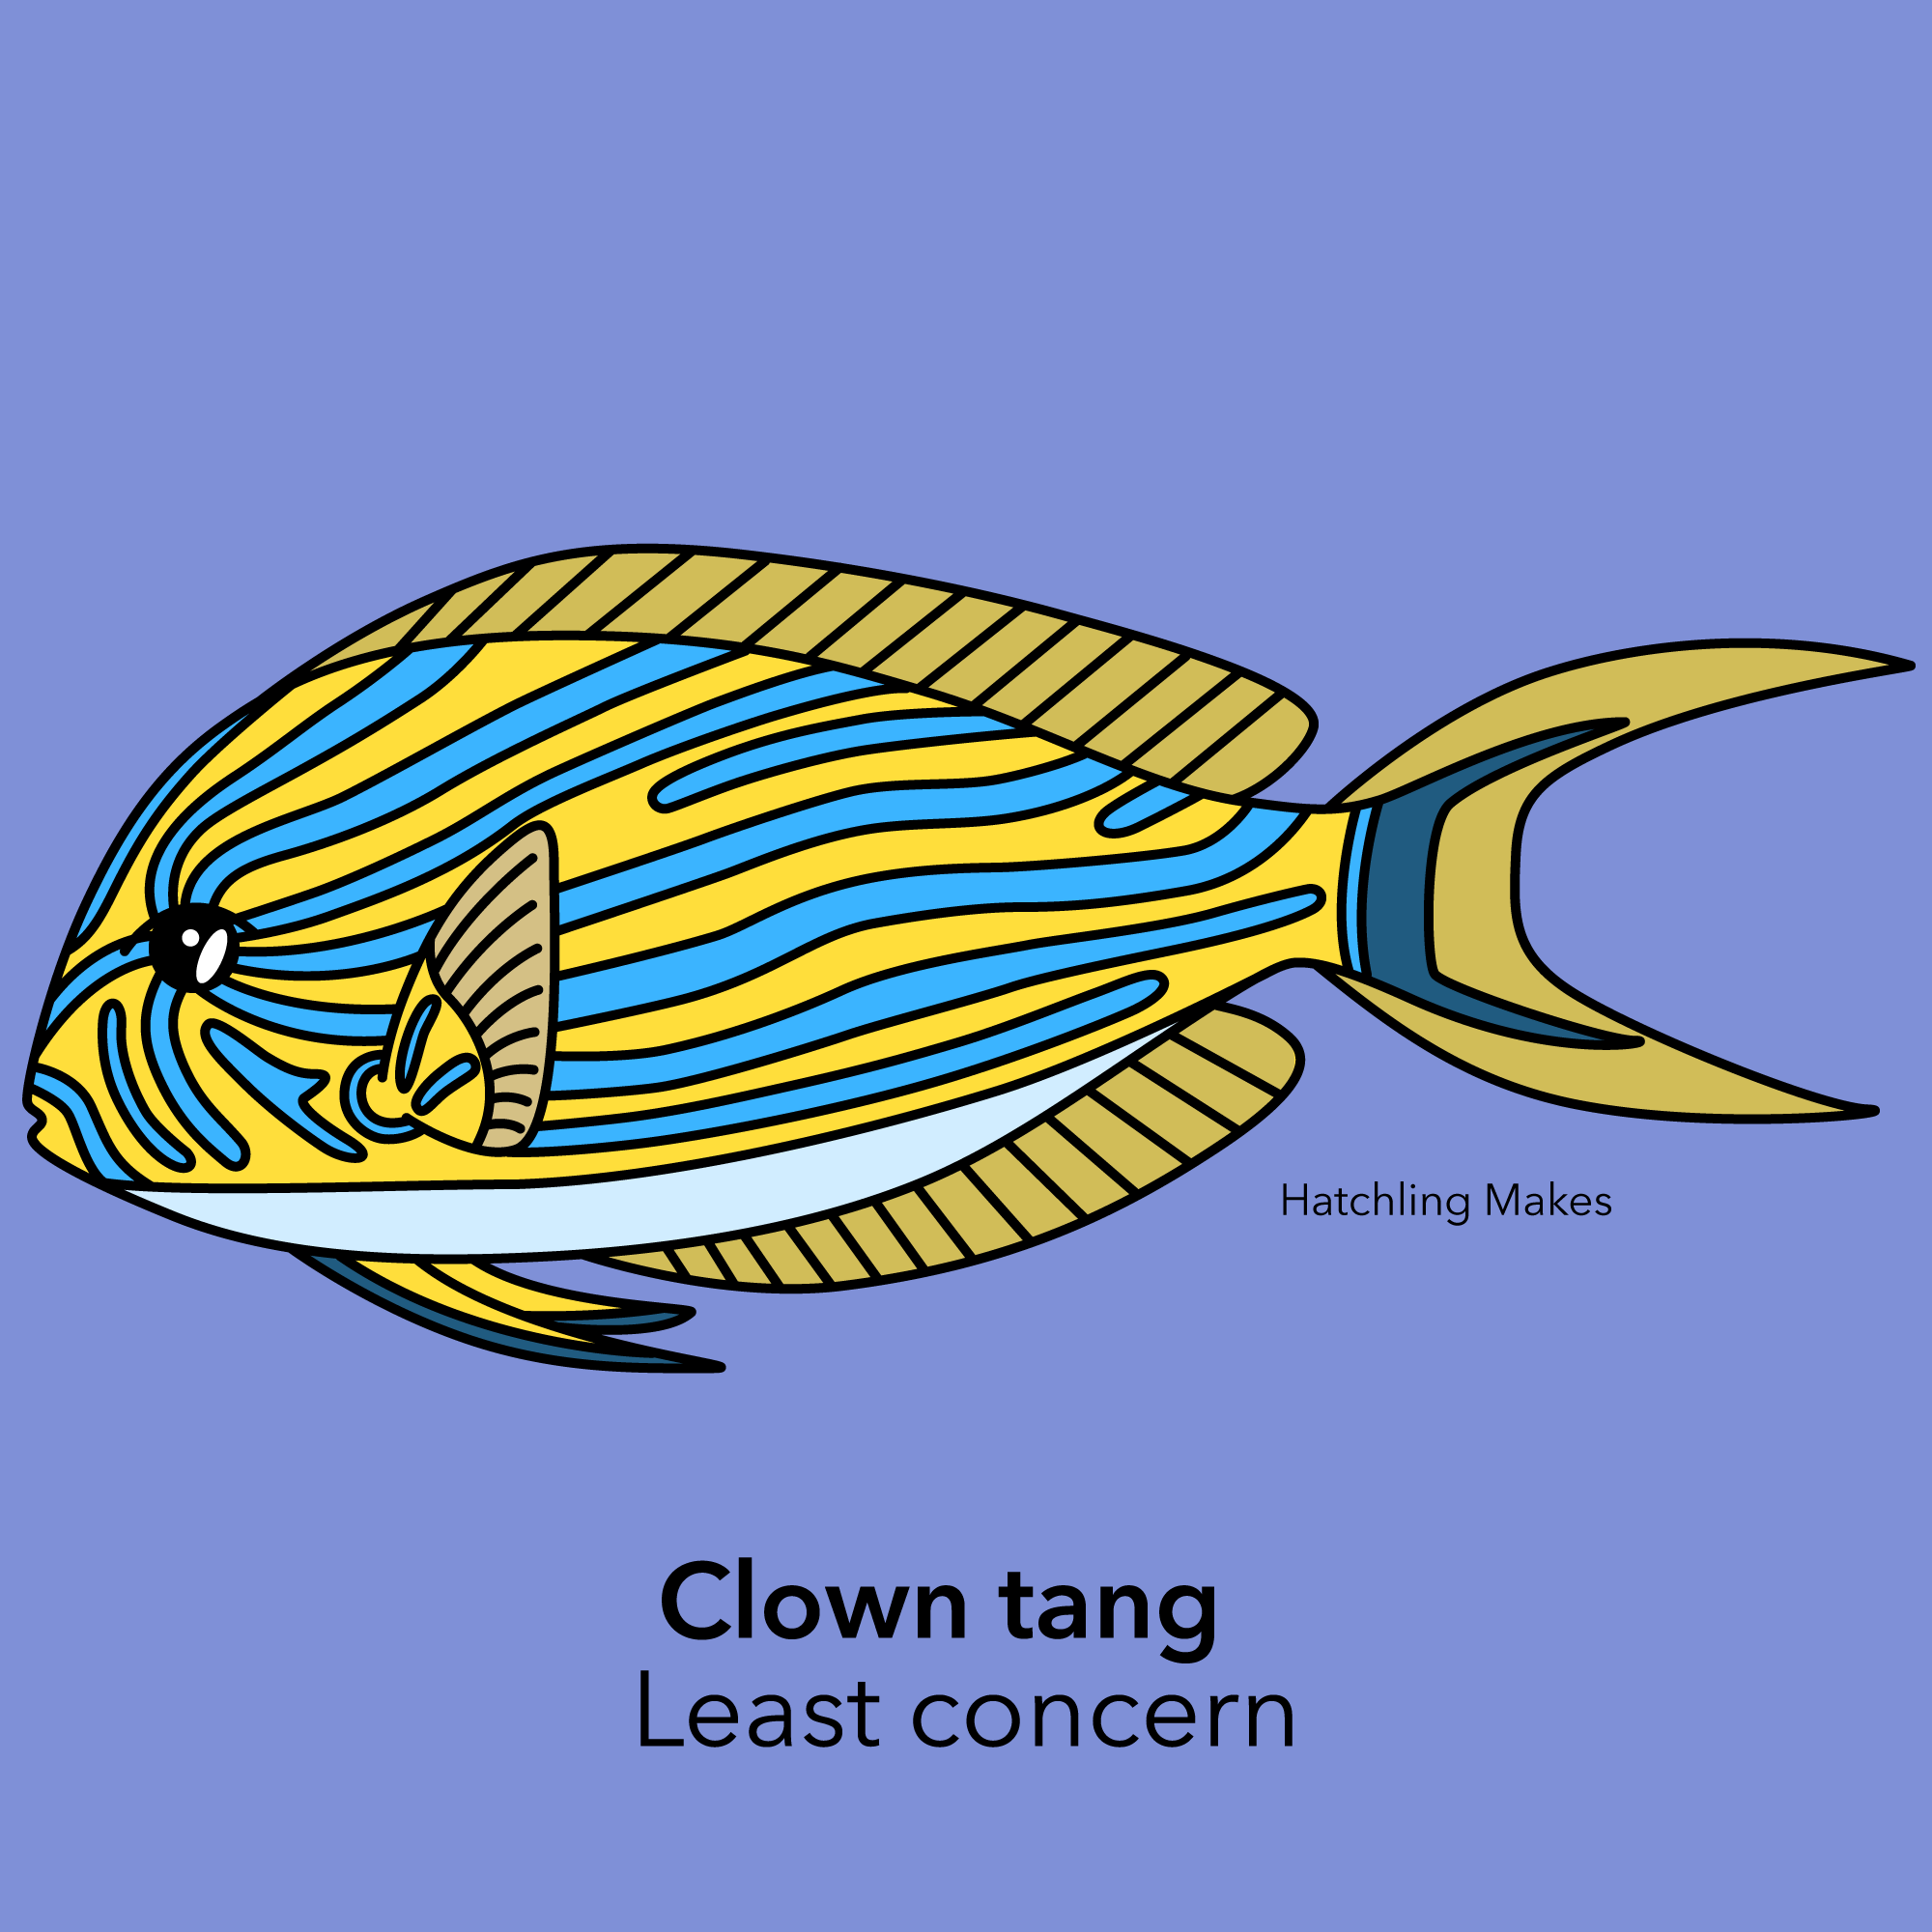 Clown tang